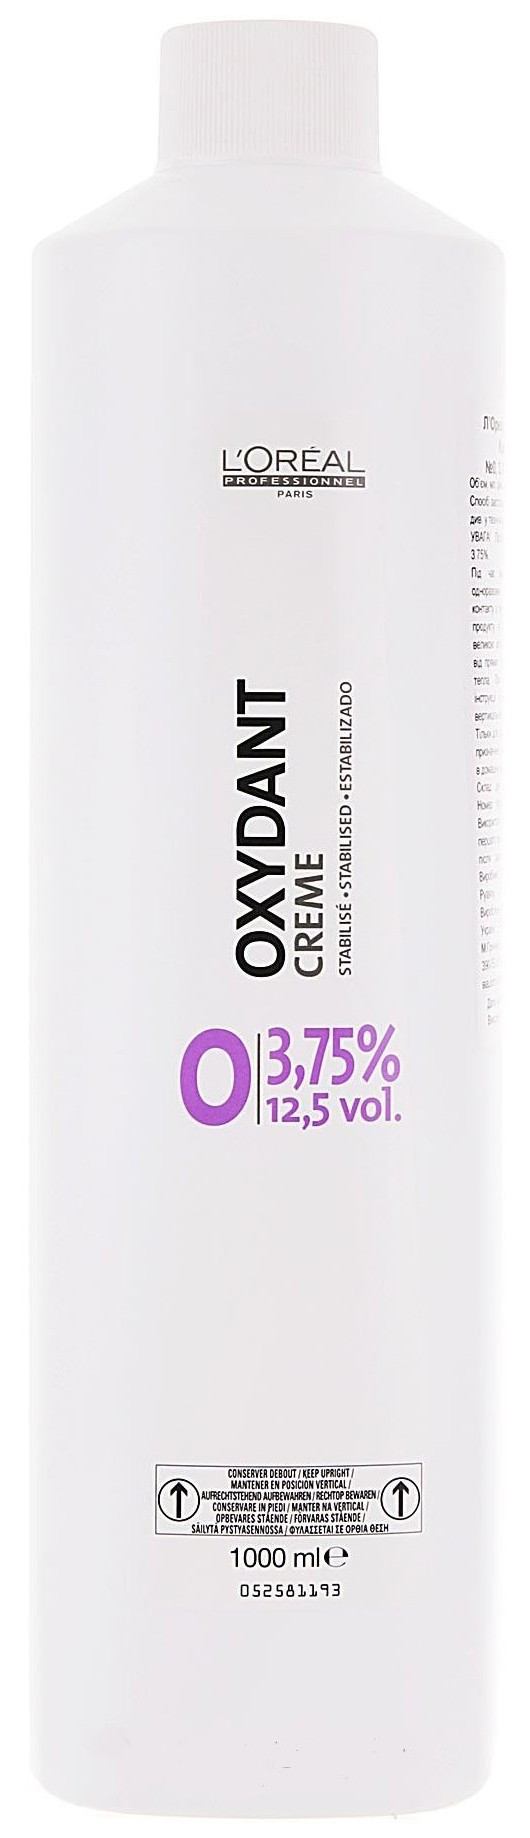 Проявитель L'Oreal Professionnel Oxydant Creame 3,75% 1000 мл проявитель l oreal professionnel dia activator 2 7% 9 vol 1000 мл